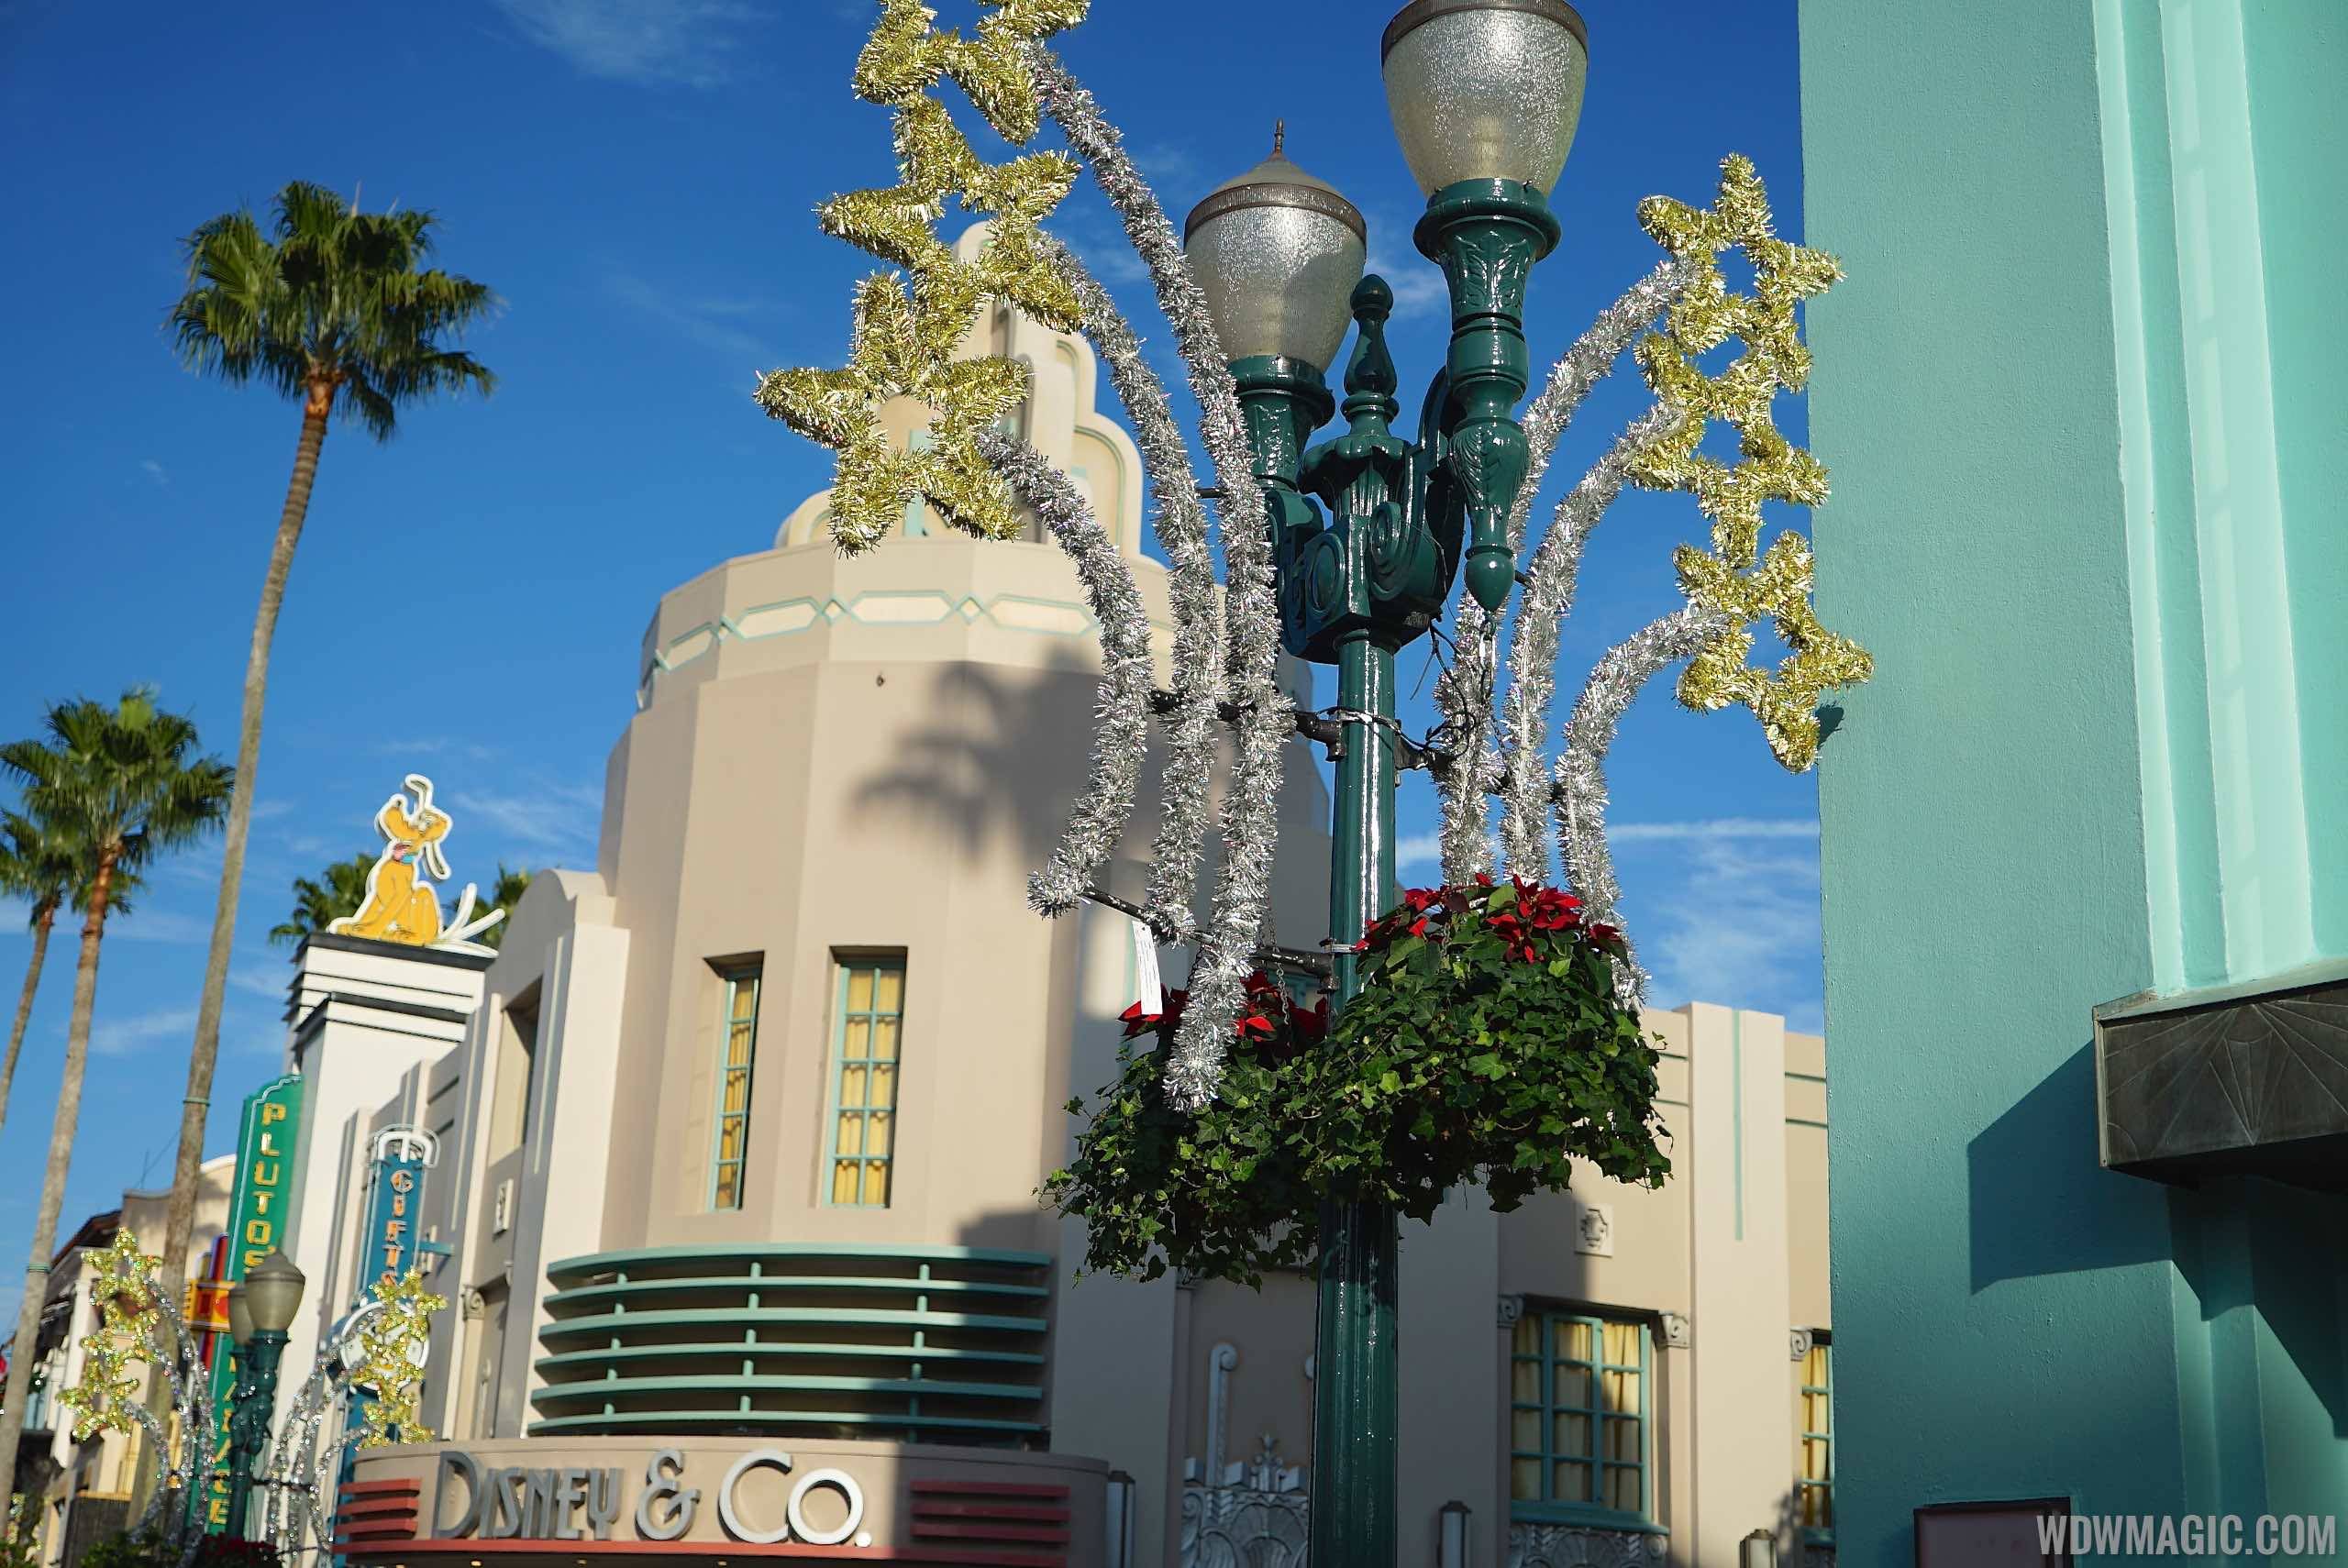 Disney's Hollywood Studios holiday decorations 2014